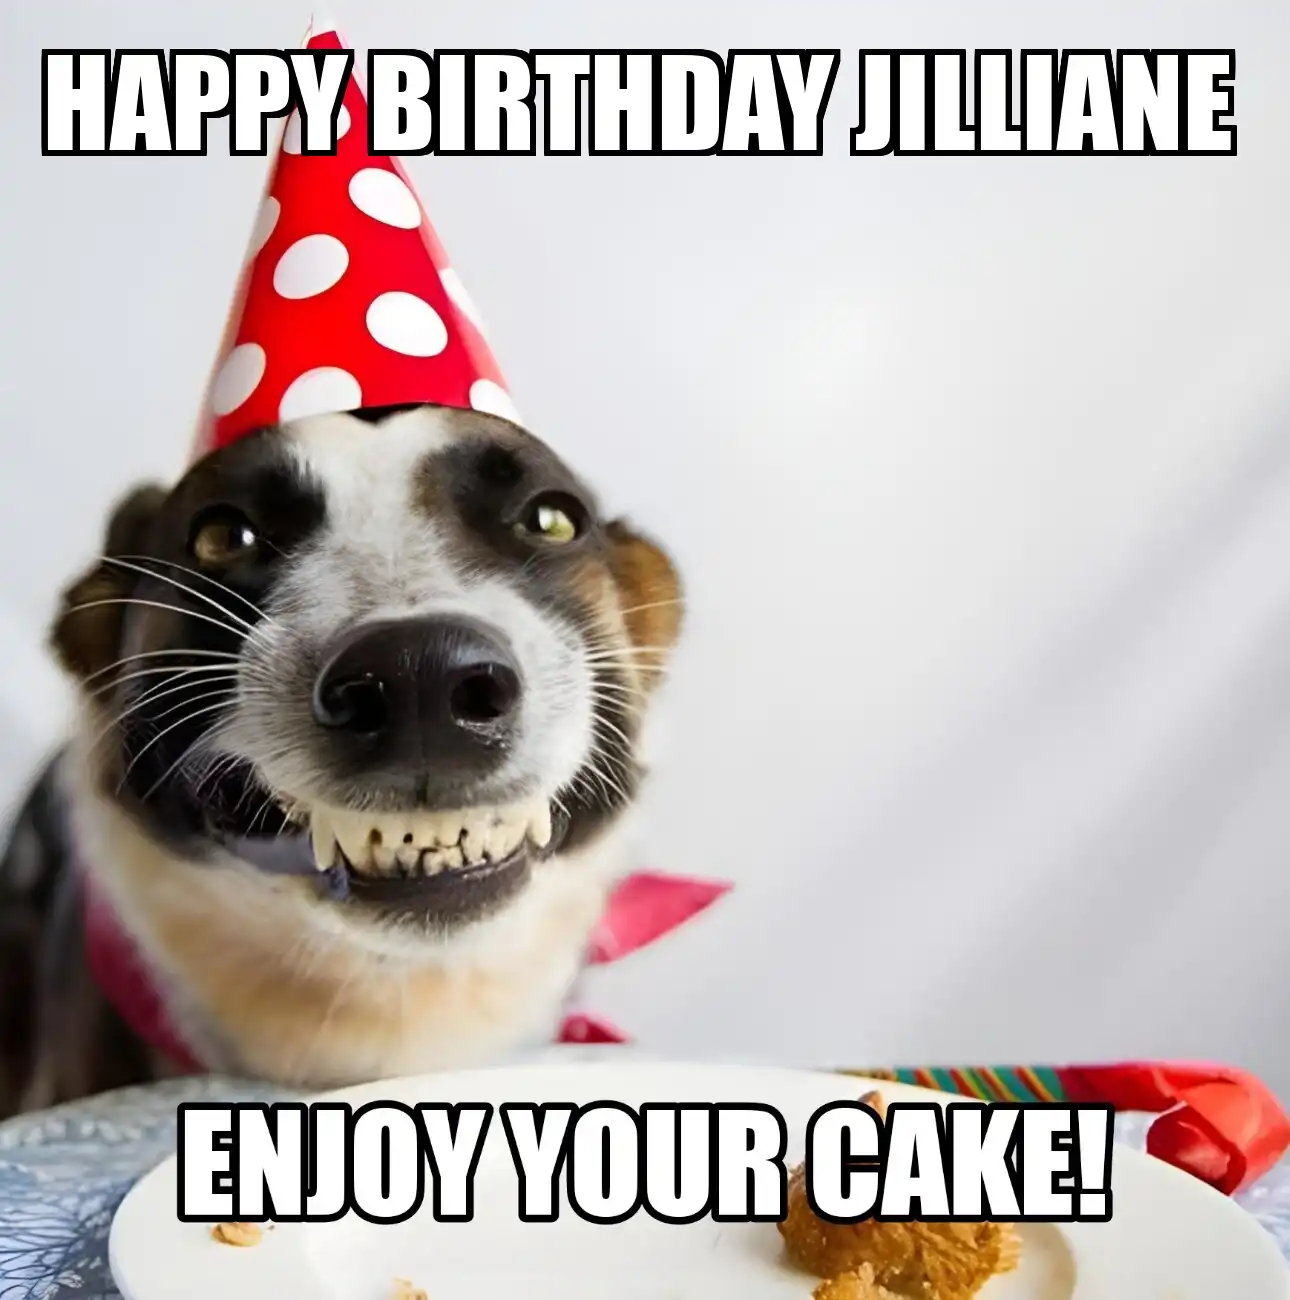 Happy Birthday Jilliane Enjoy Your Cake Dog Meme